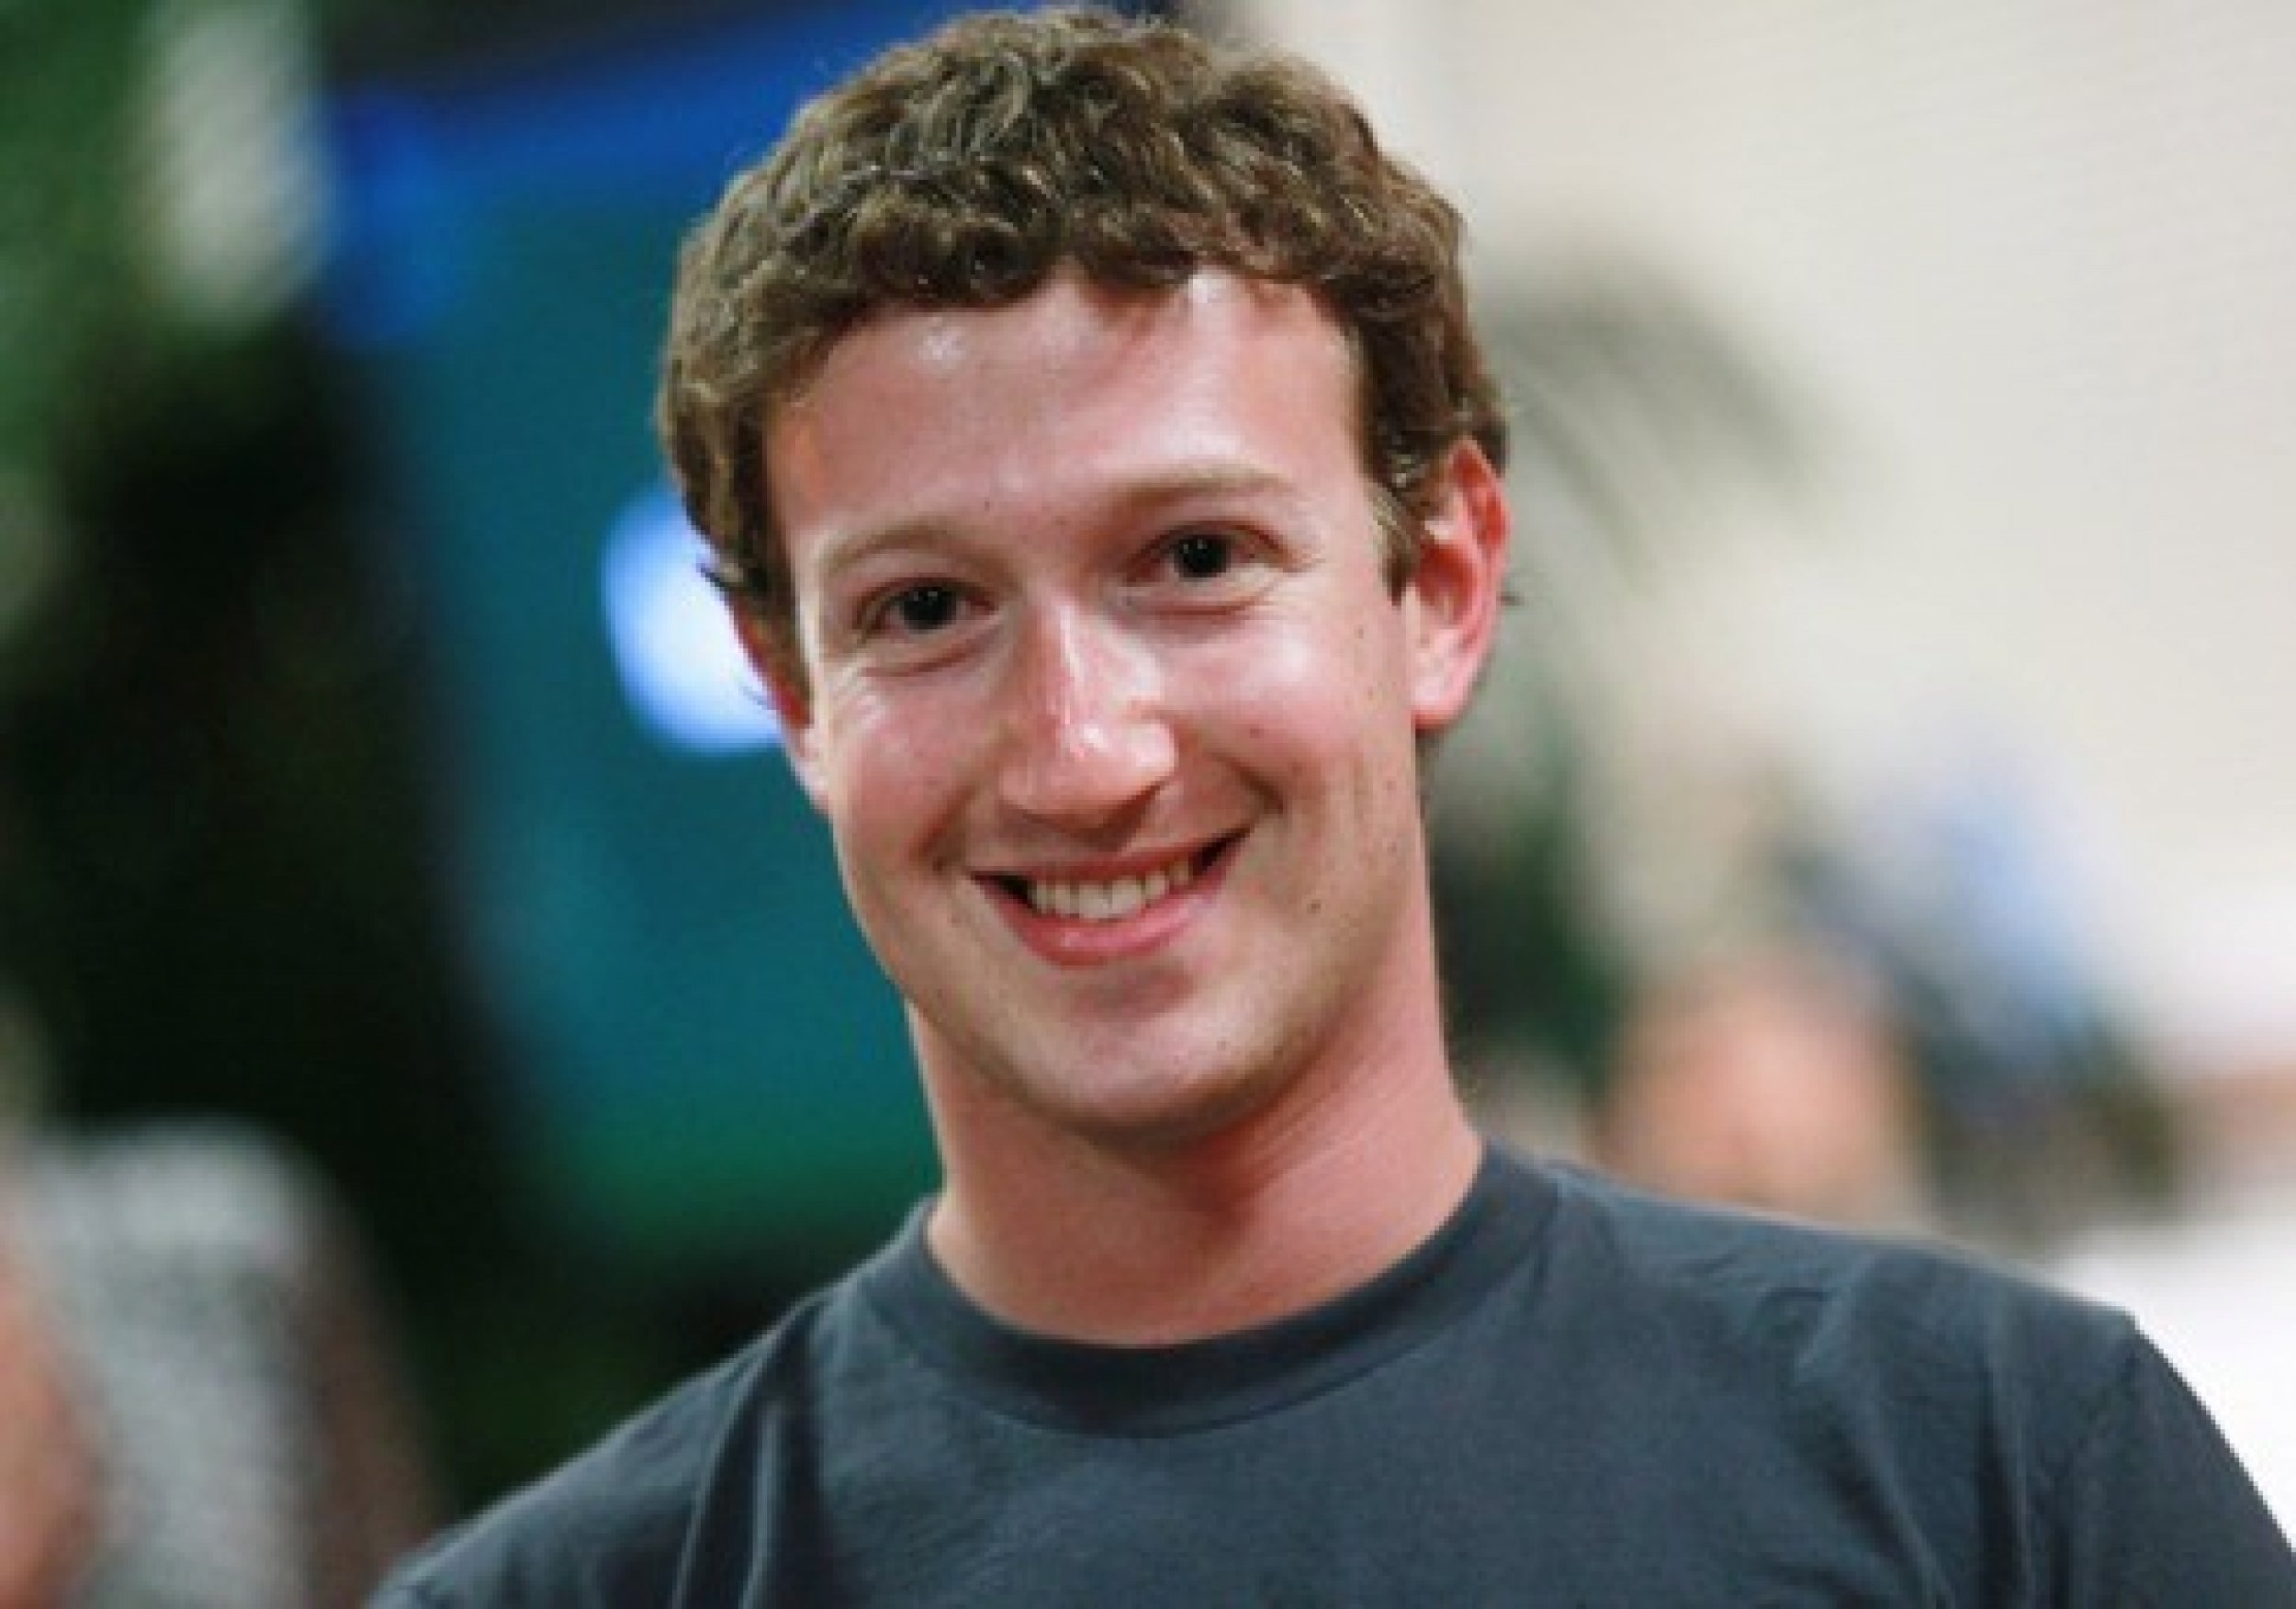 2. Mark Zuckerberg